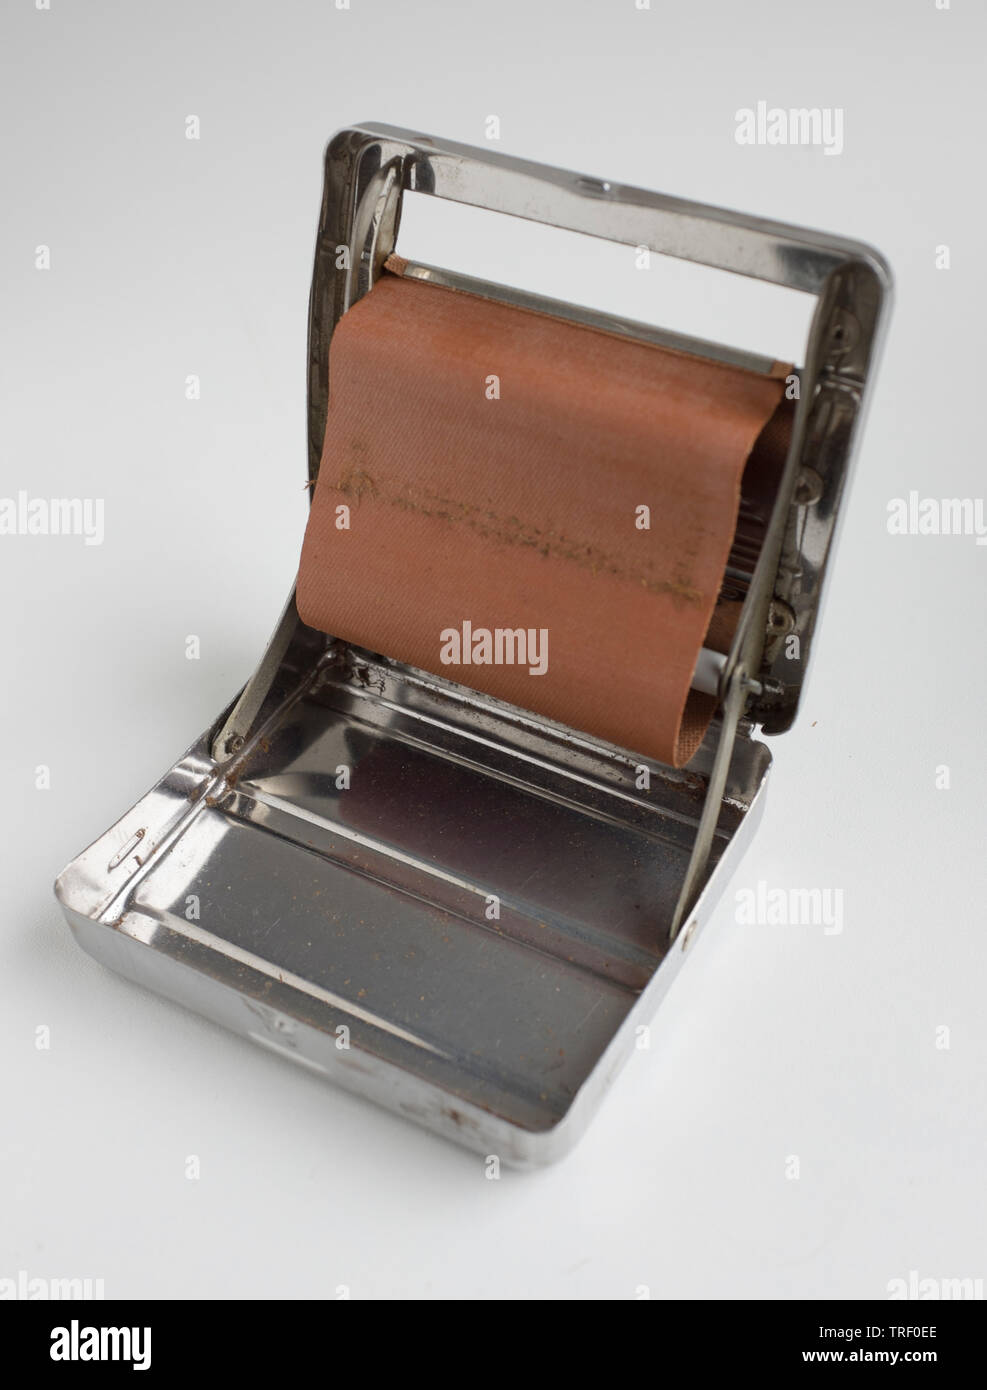 Máquina de liar puros fotografías e imágenes de alta resolución - Alamy